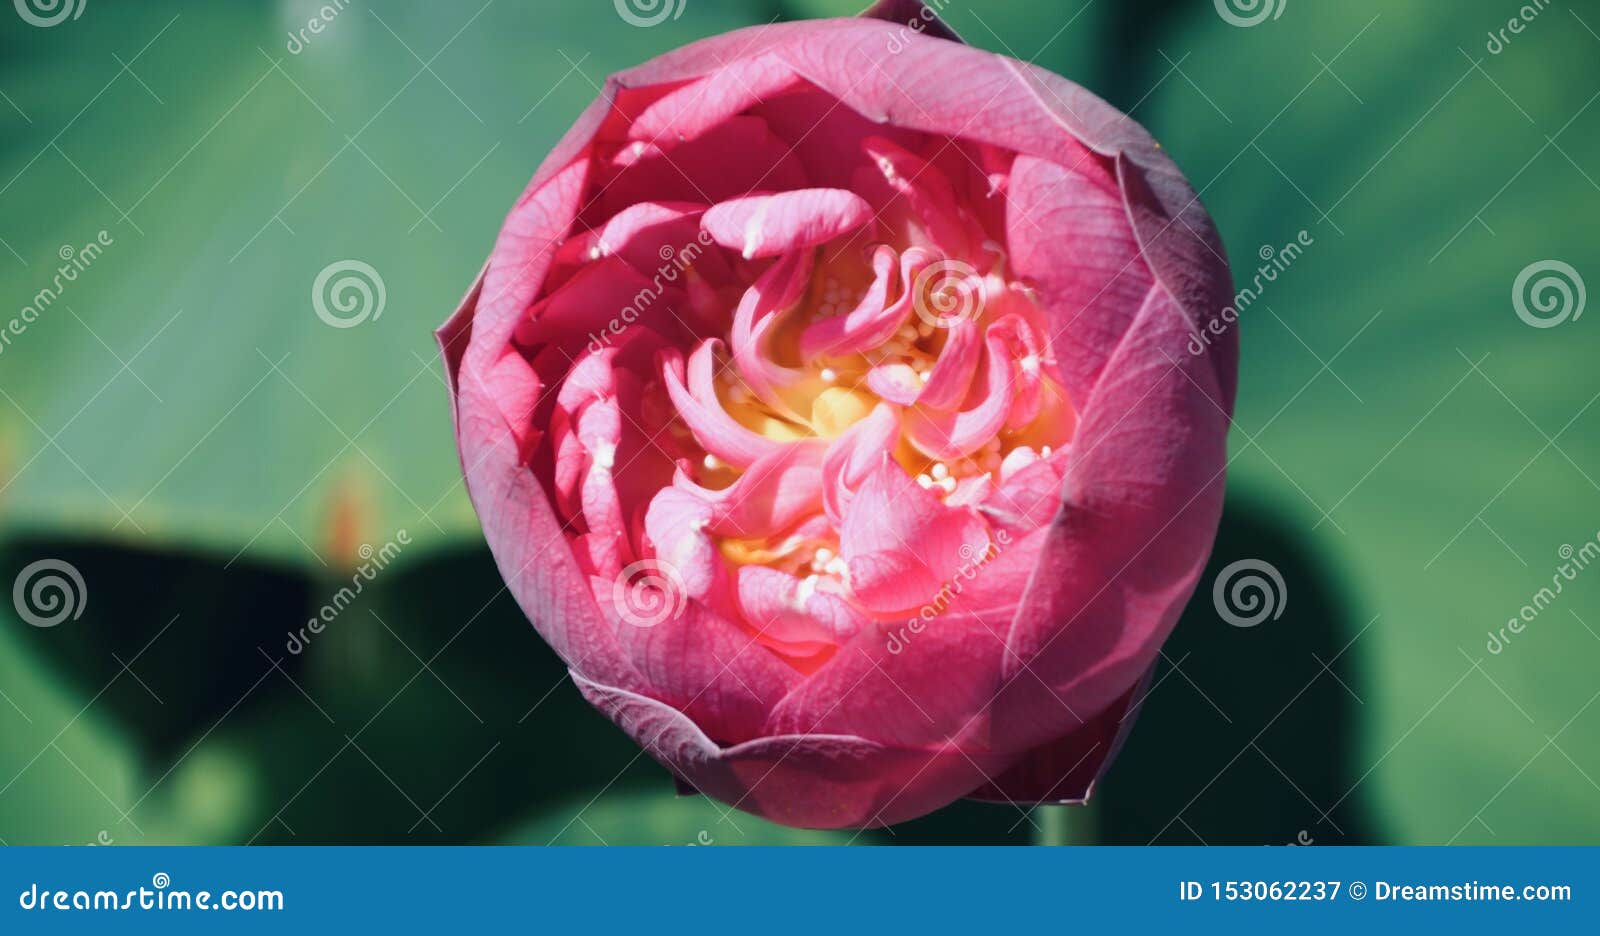 nice natural pink flower